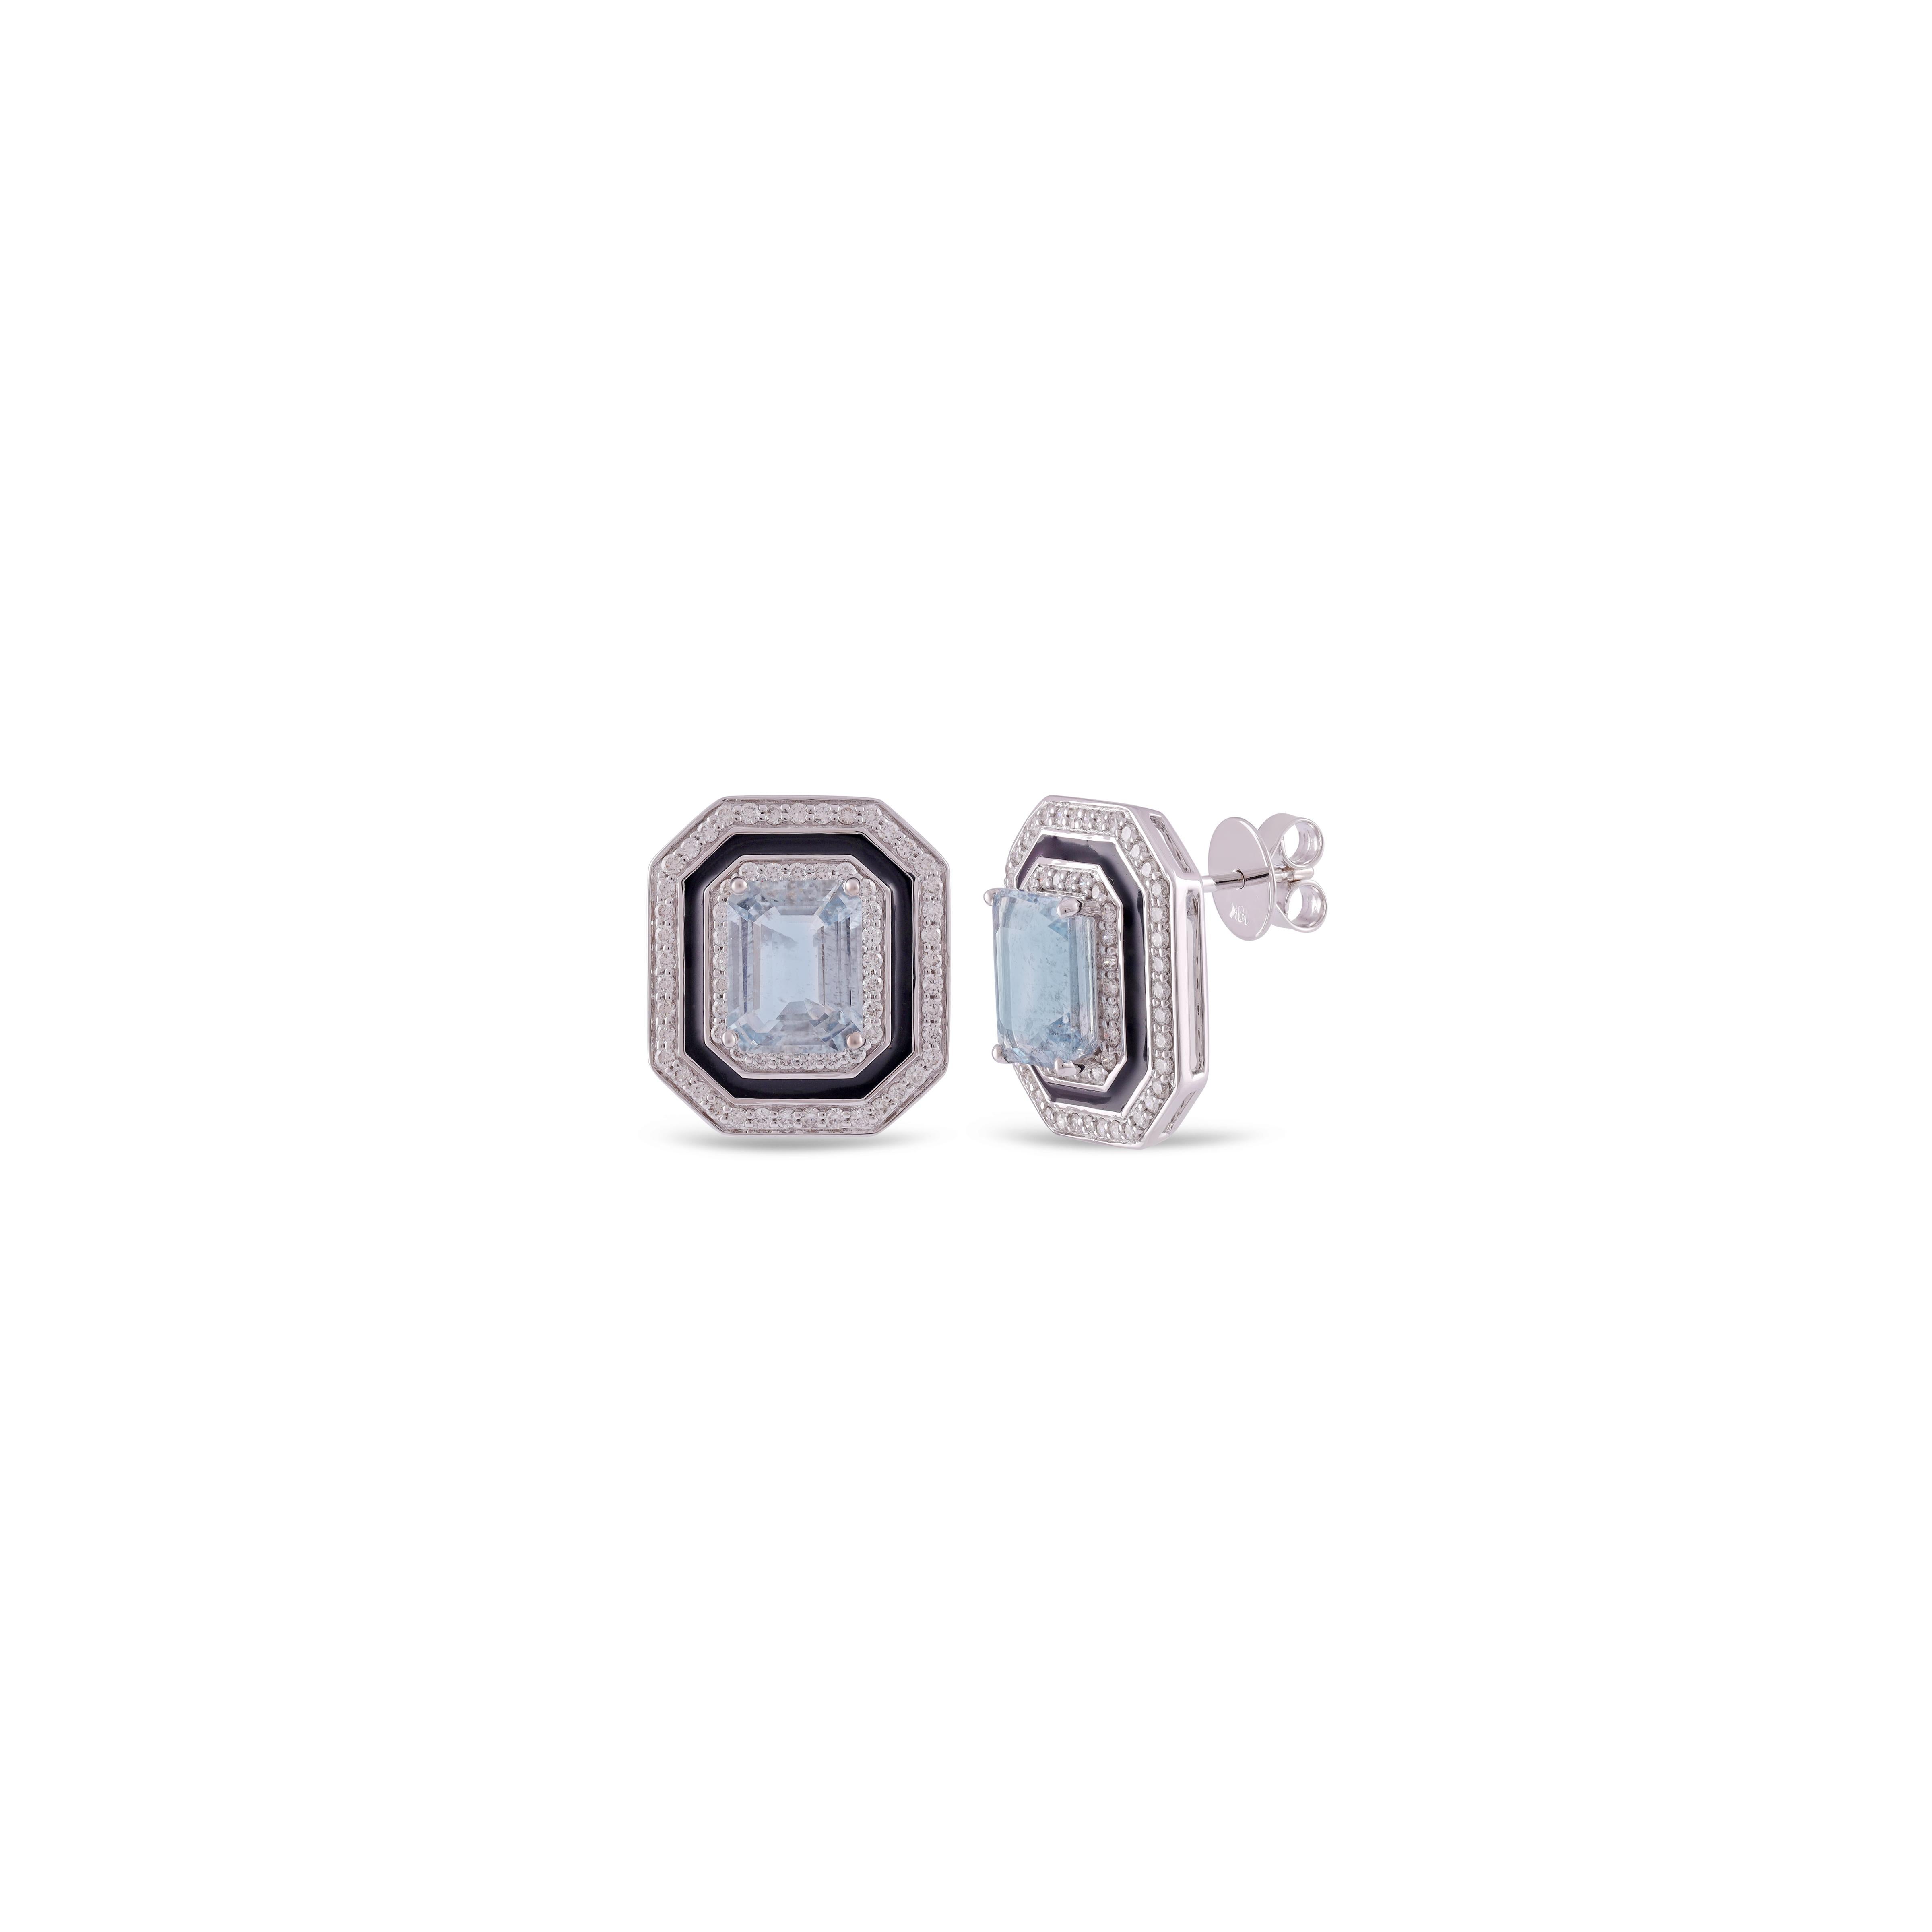 Magnificent 5.03 Carat Clear Aquamarine & Black Enamel Earring Studs in 18k White Gold

Aquamarine: 5.03 carats
Diamond - 1.2 carat

Custom Services
Available in Different  gemstones 
Request Customization

